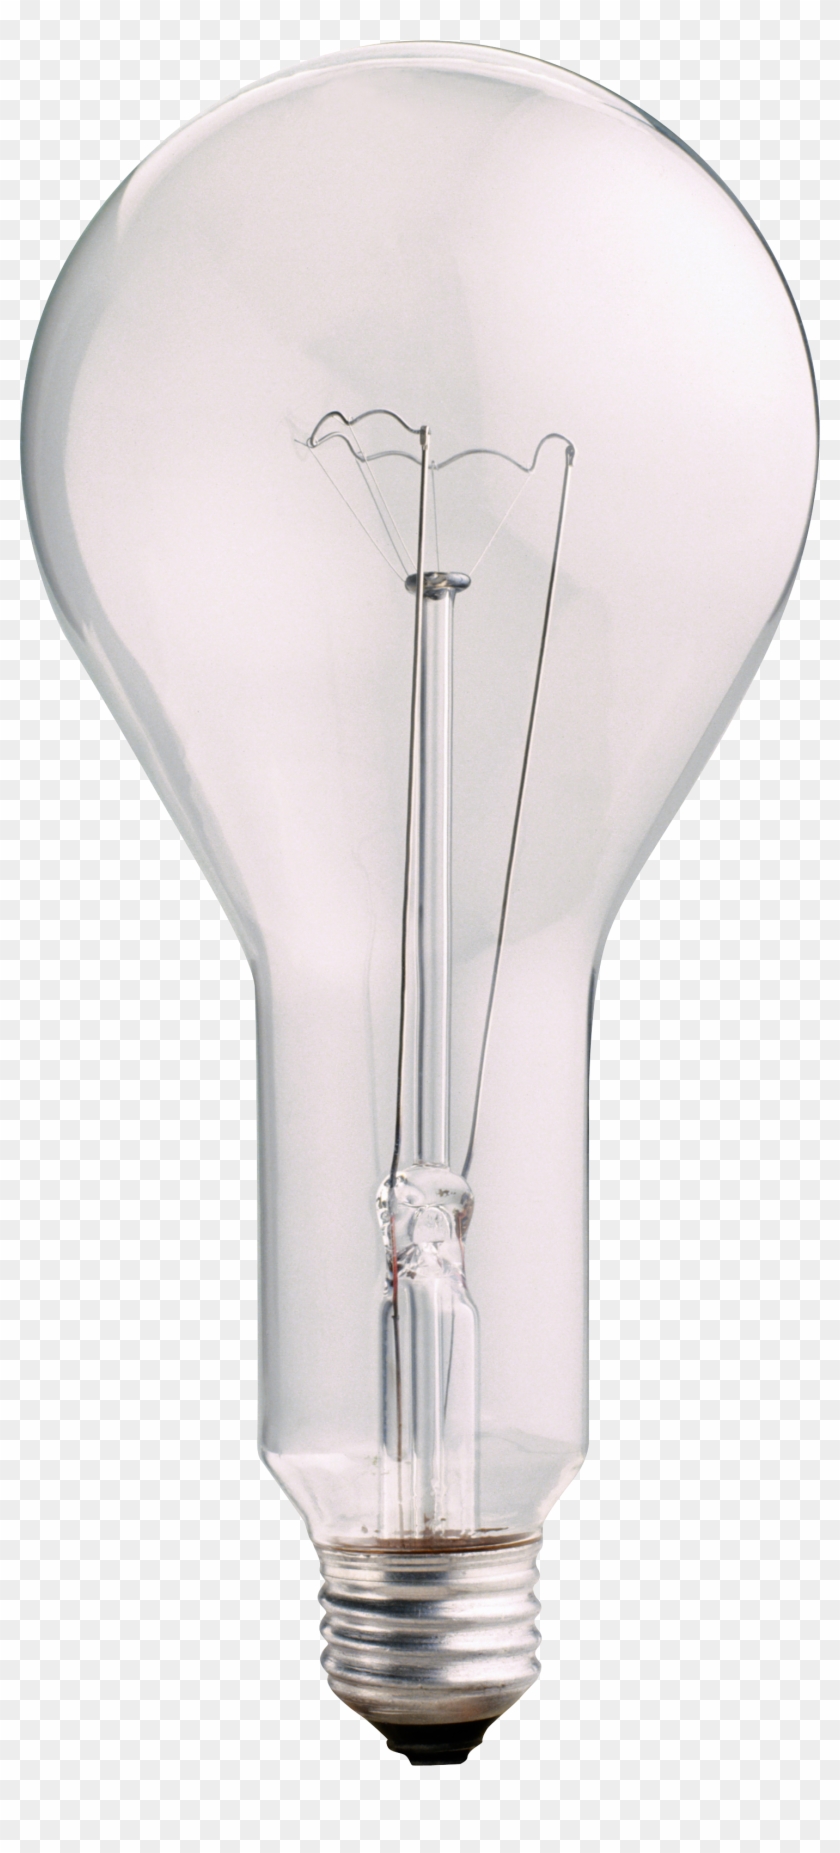 Lamp Png Image - Light Bulb Nobacks Clipart